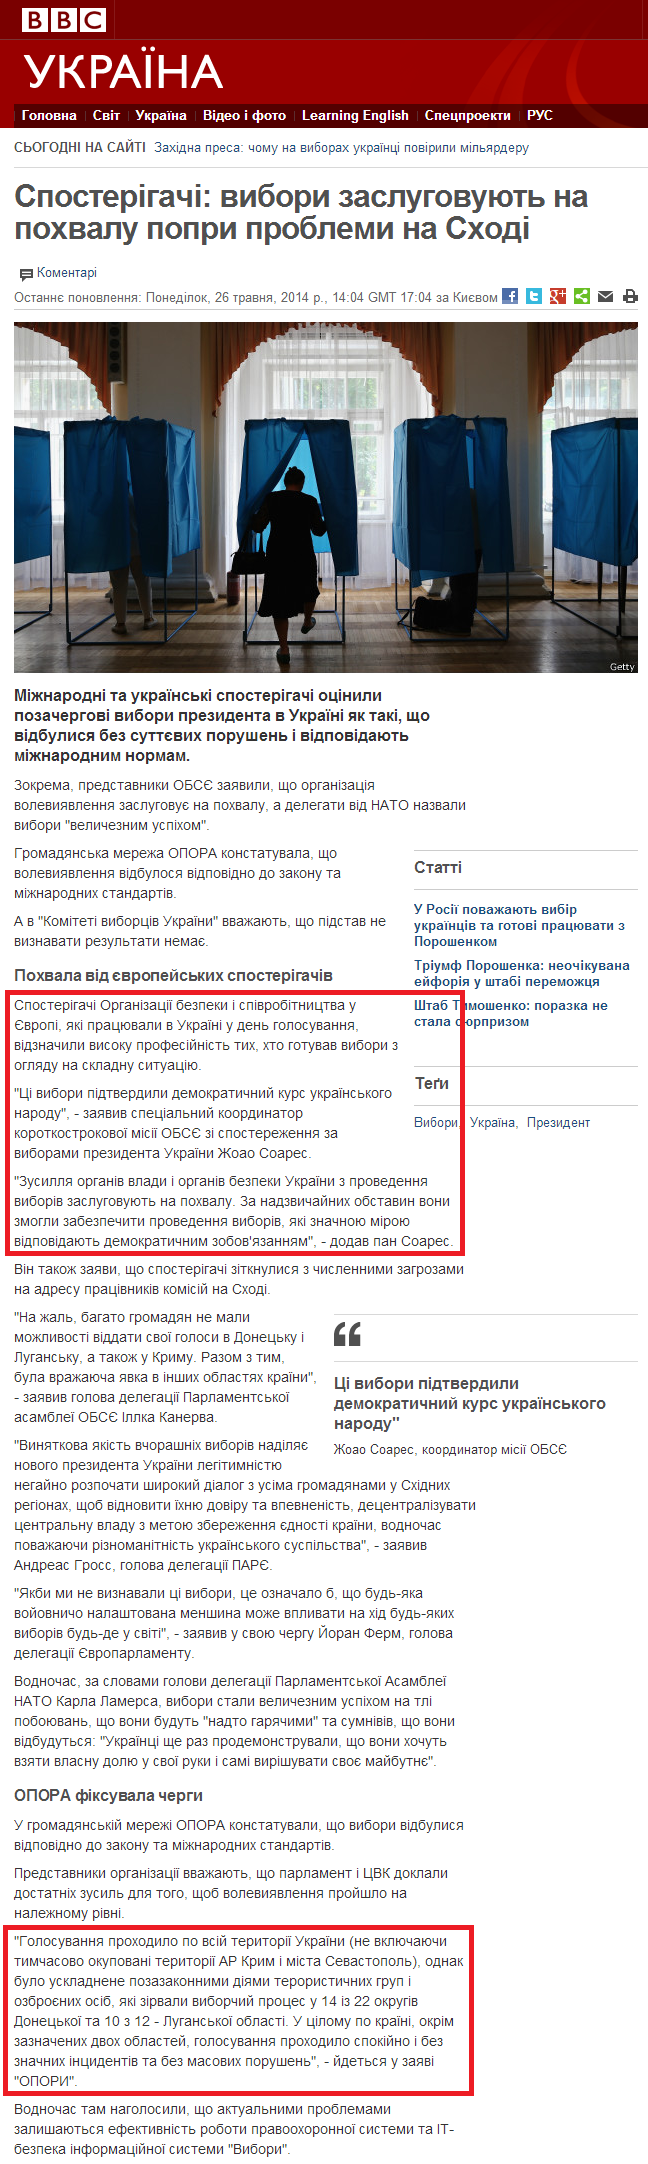 http://www.bbc.co.uk/ukrainian/politics/2014/05/140526_election_results_comments_rl.shtml